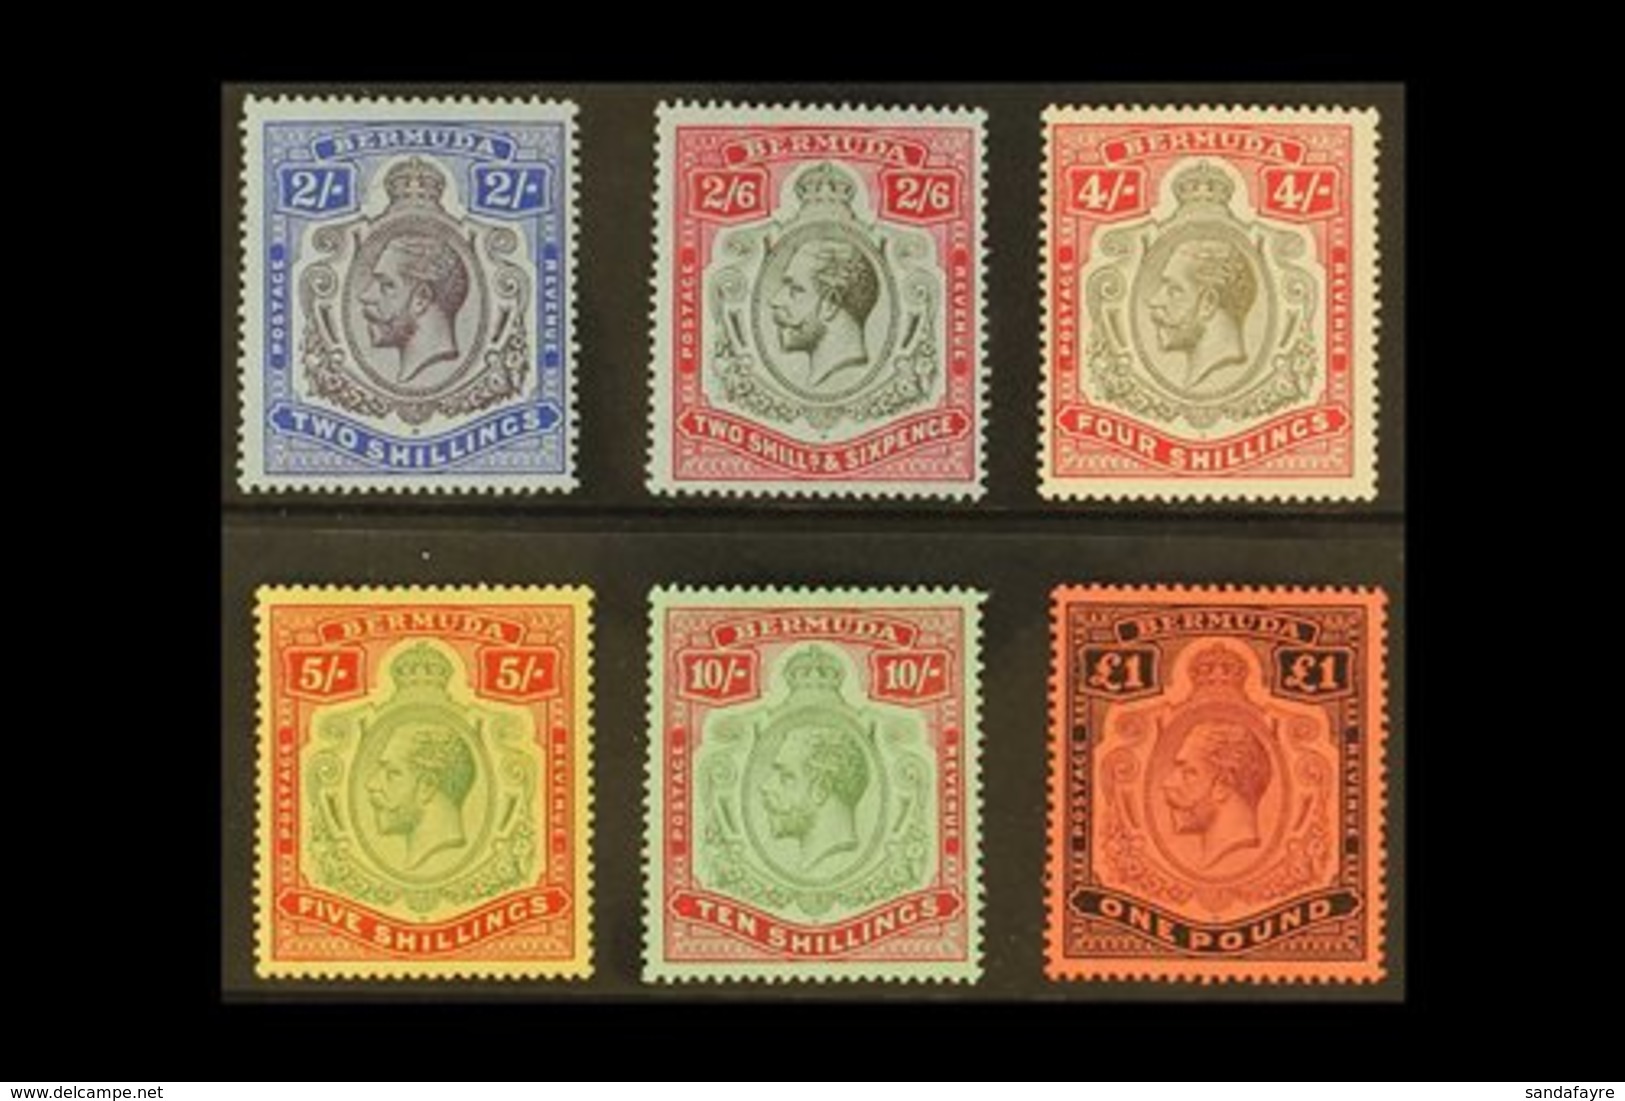 1918-22  KGV Wmk Mult. Crown CA, High Values Set, SG 51b/55, Very Fine Mint (6 Stamps). For More Images, Please Visit Ht - Bermudas